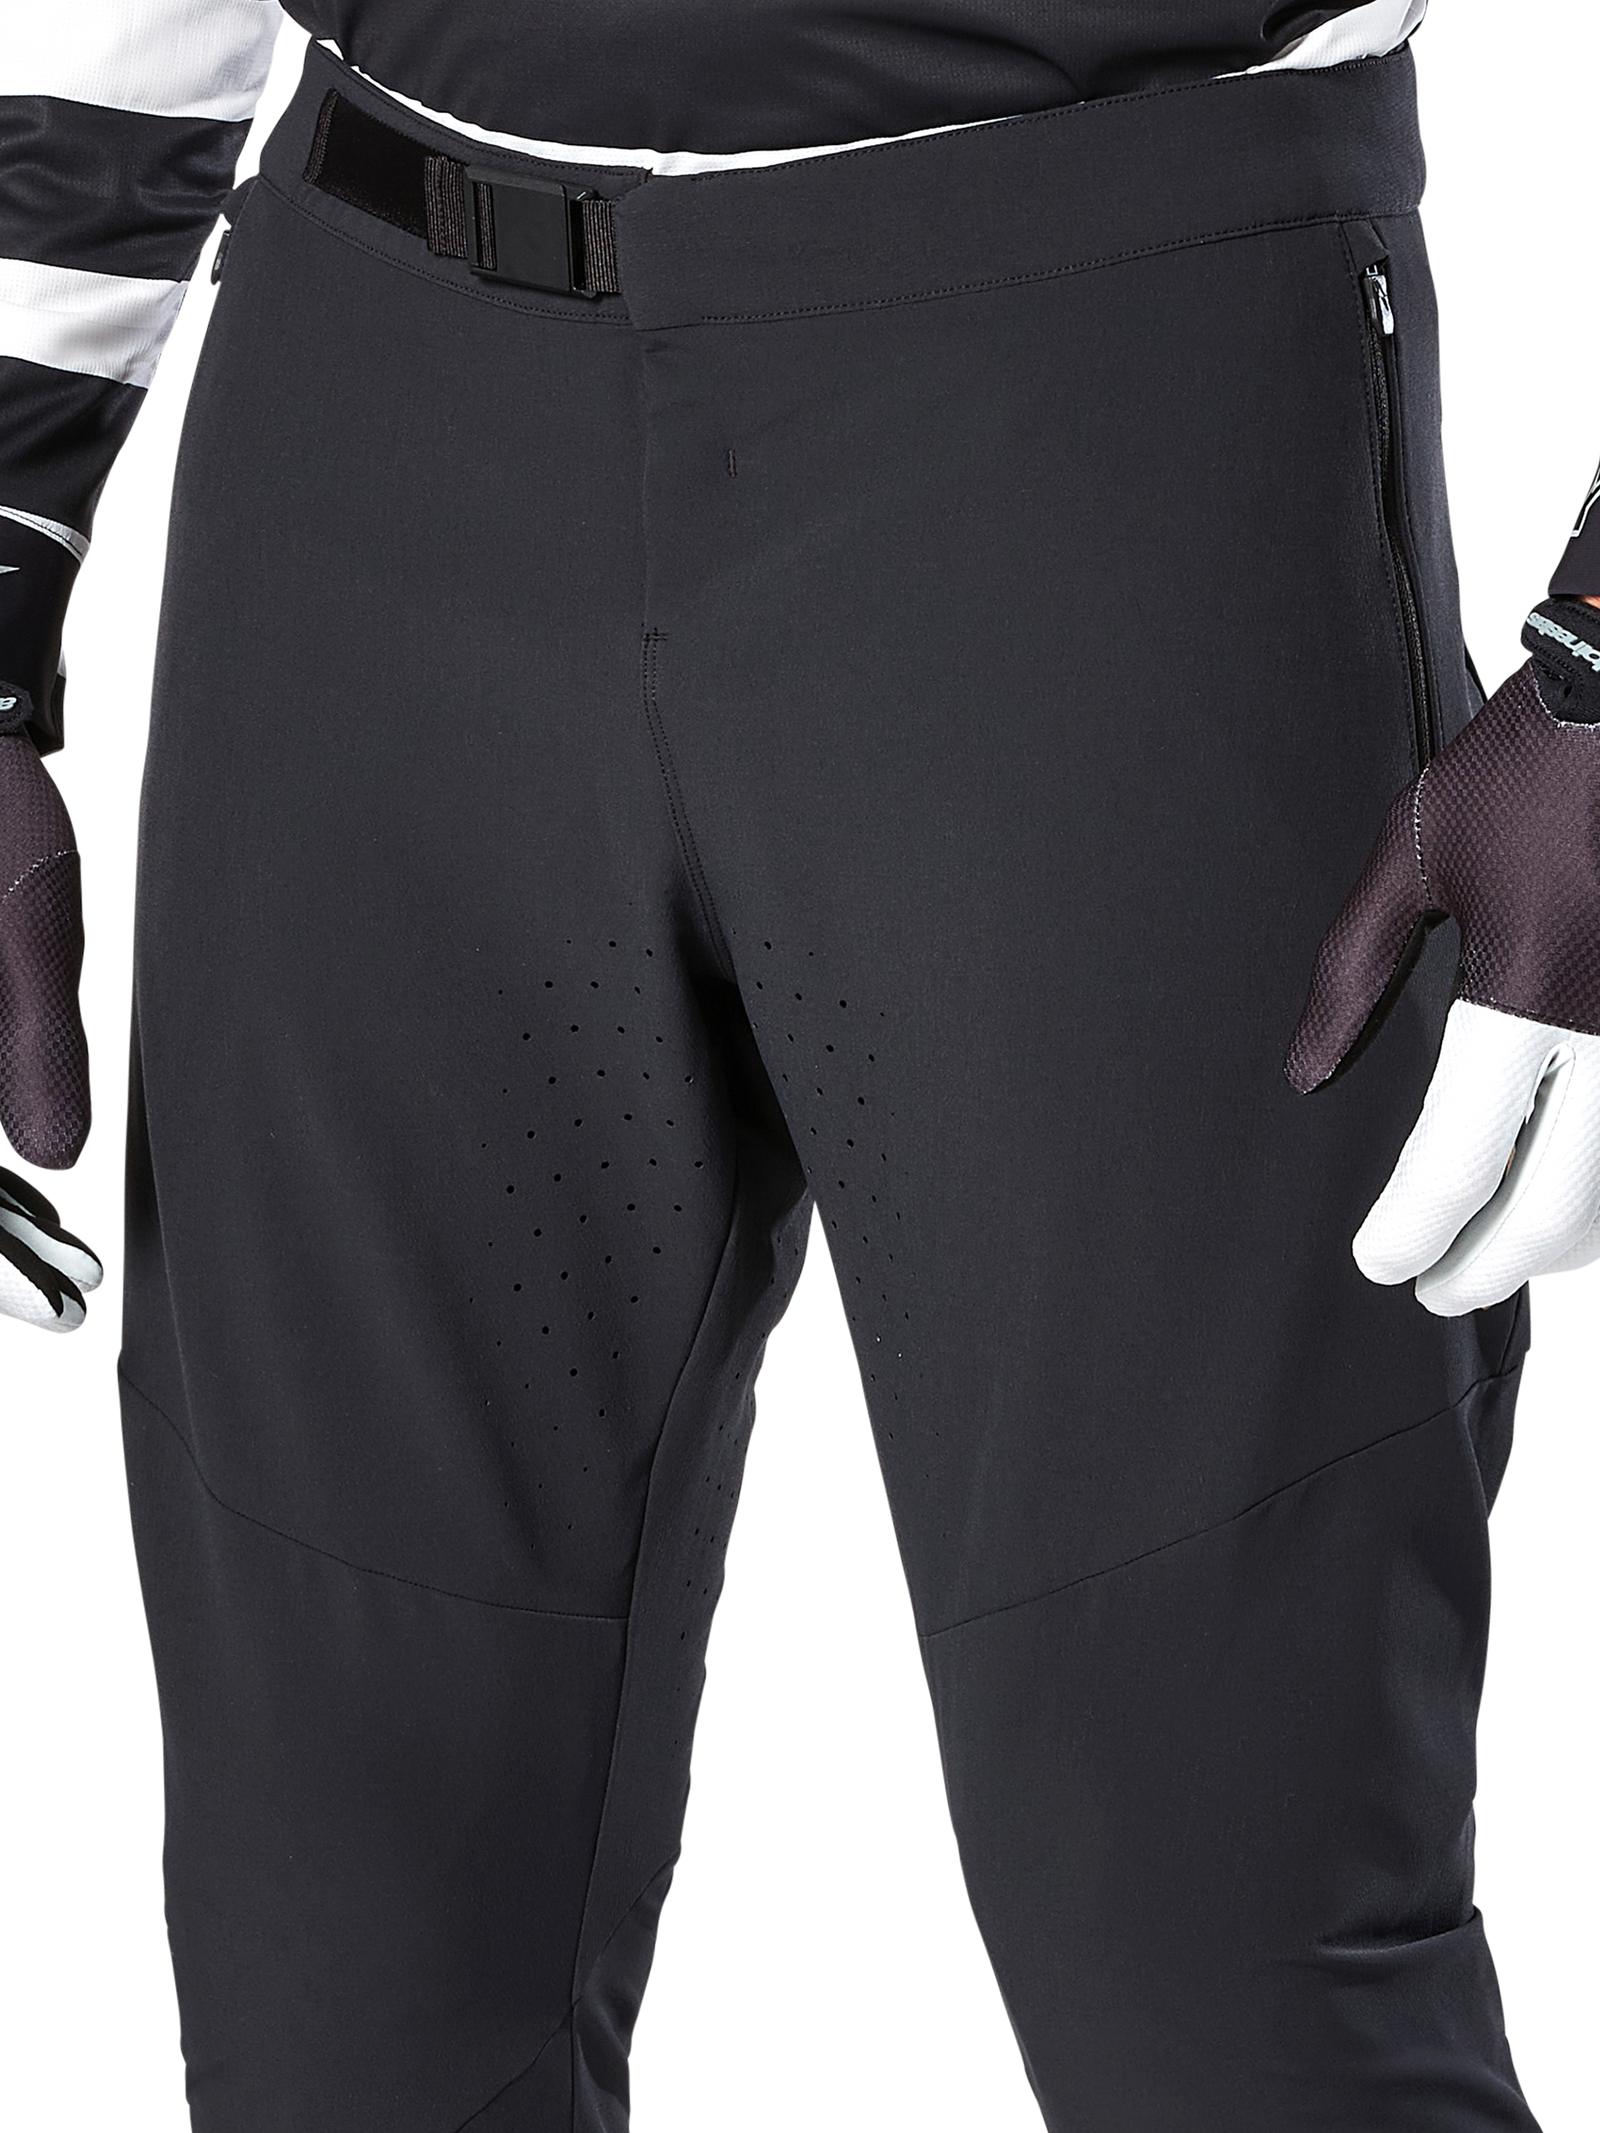 A-Aria Elite Pantalones